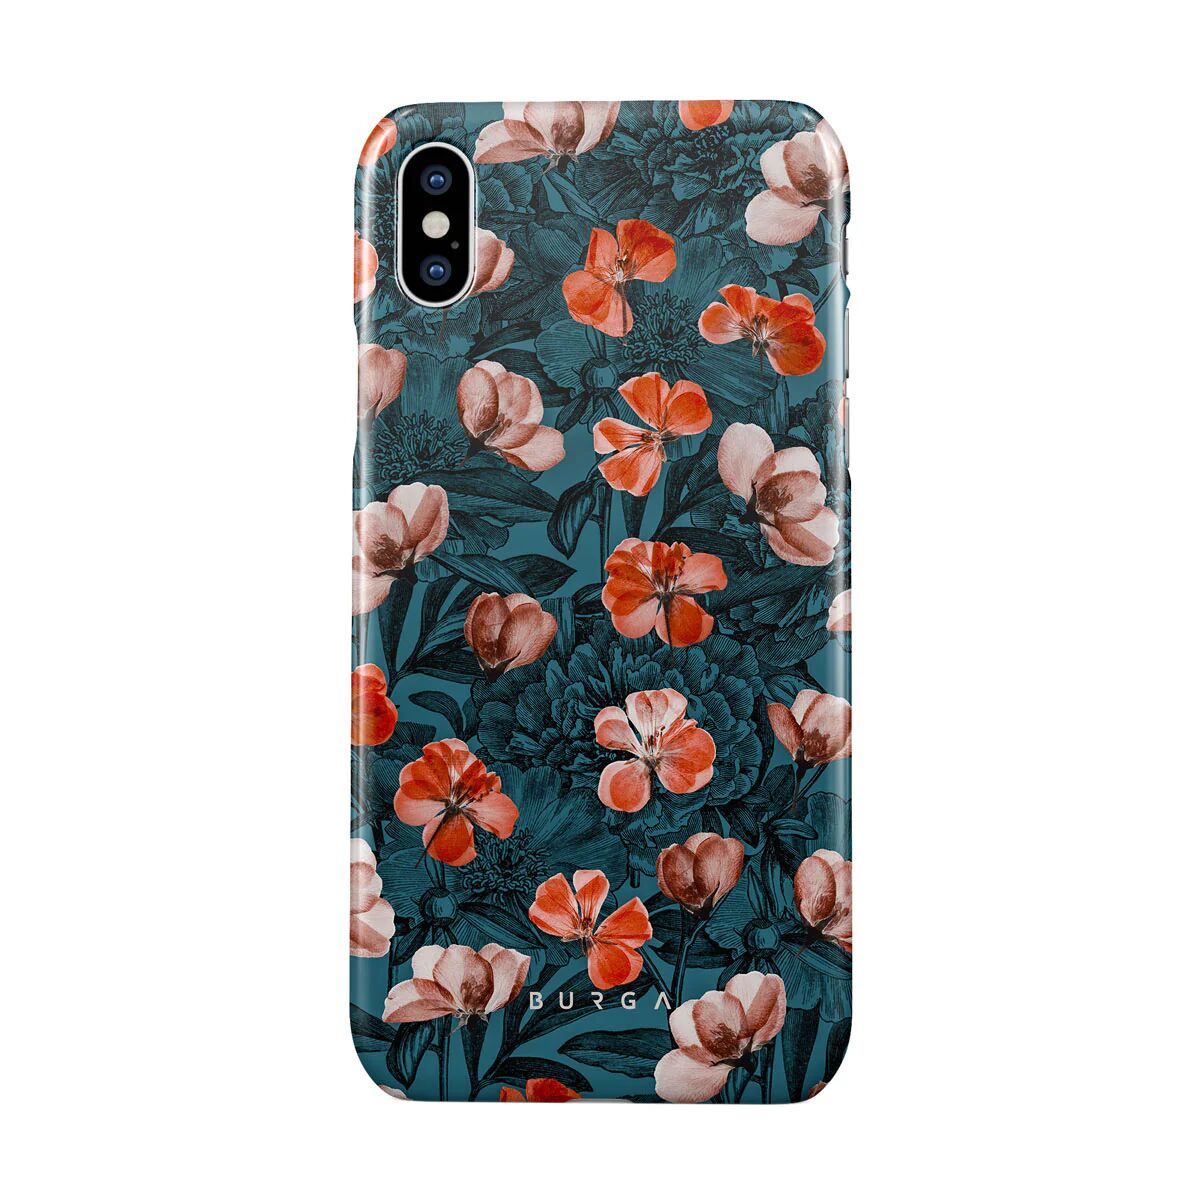 BURGA No Rain No Flowers - iPhone X / XS Case